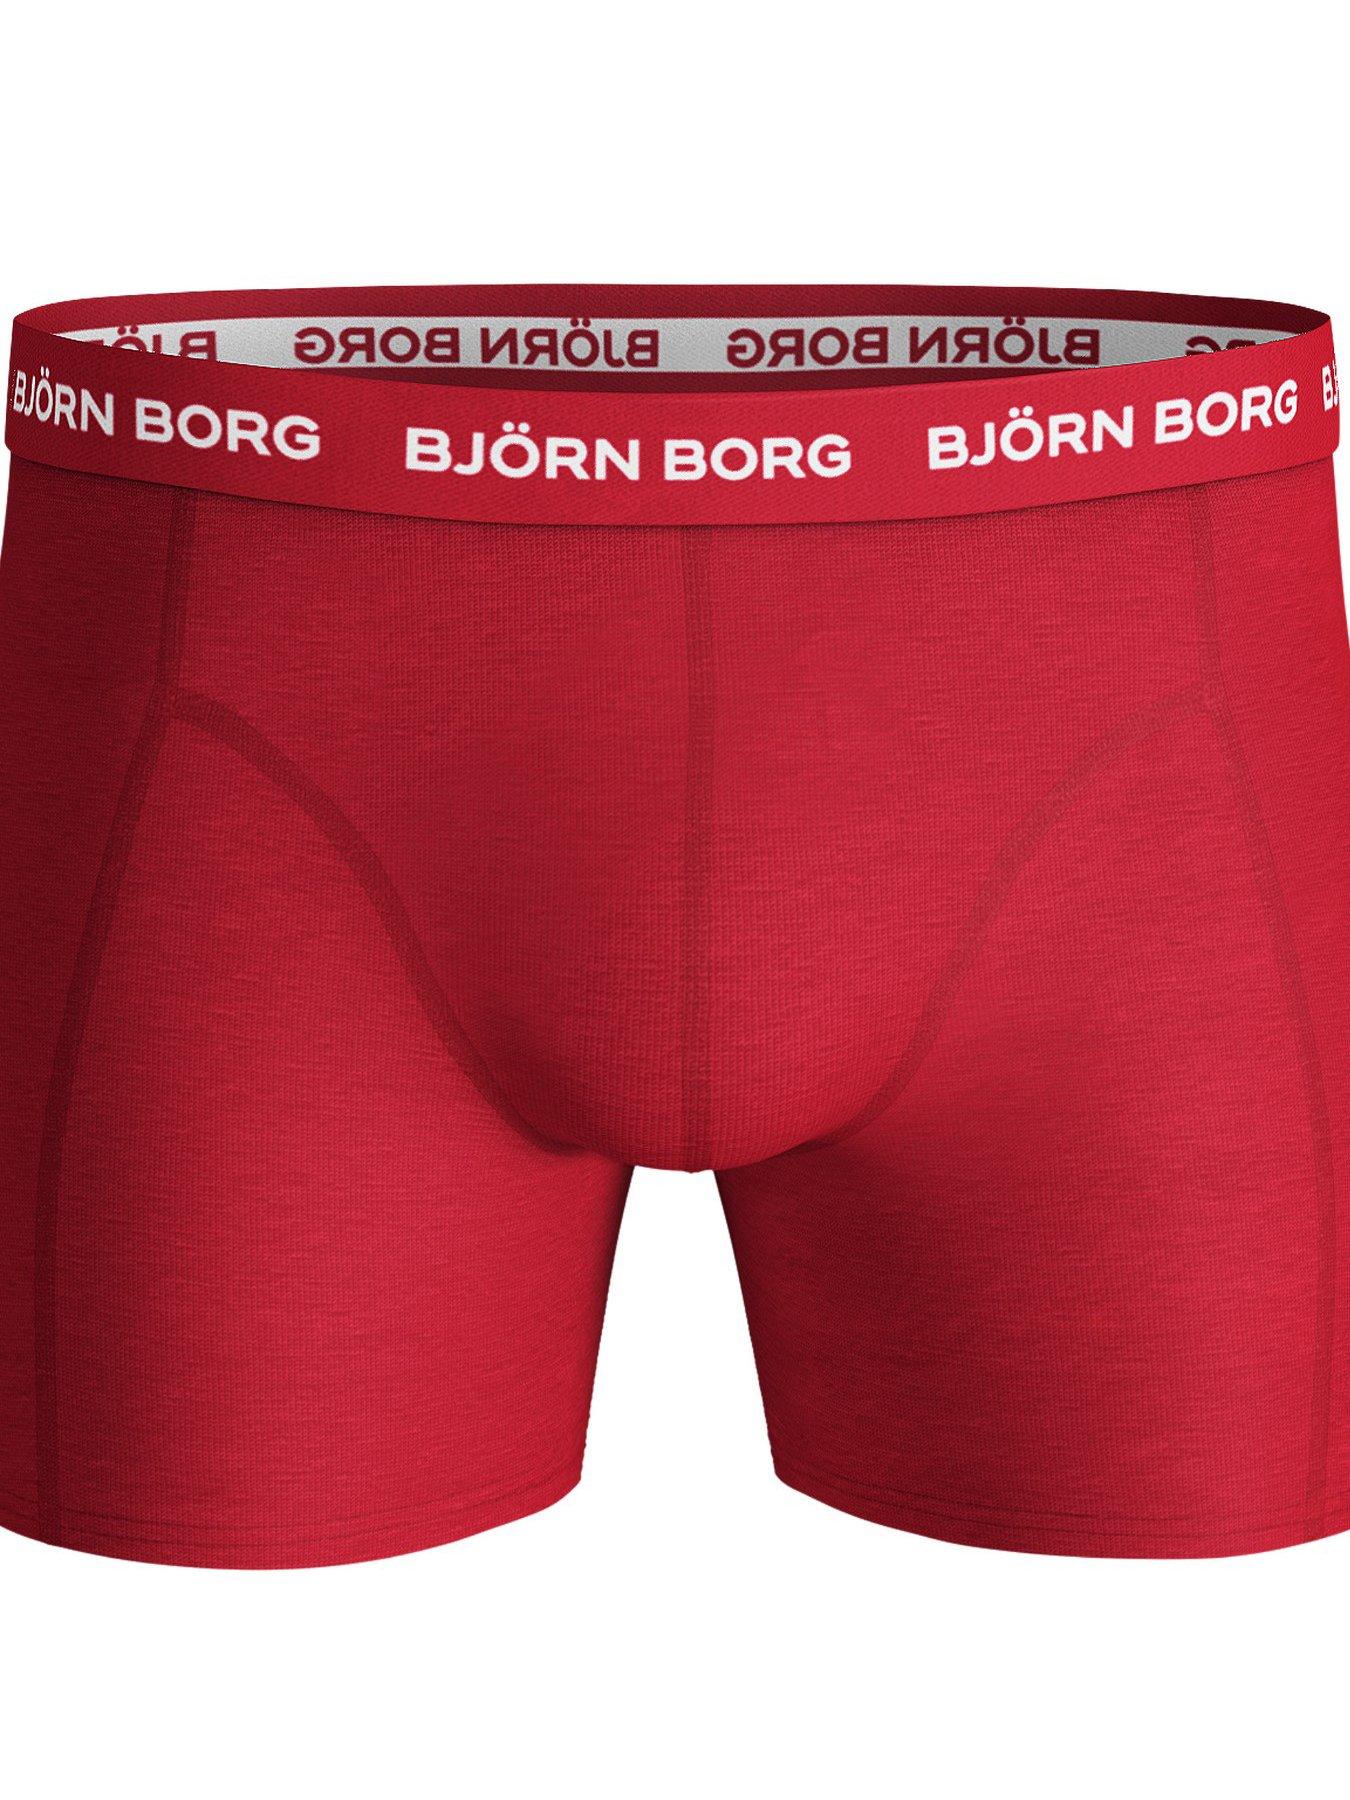 Björn Borg Cotton Stretch Boxershorts Men (5-pack)